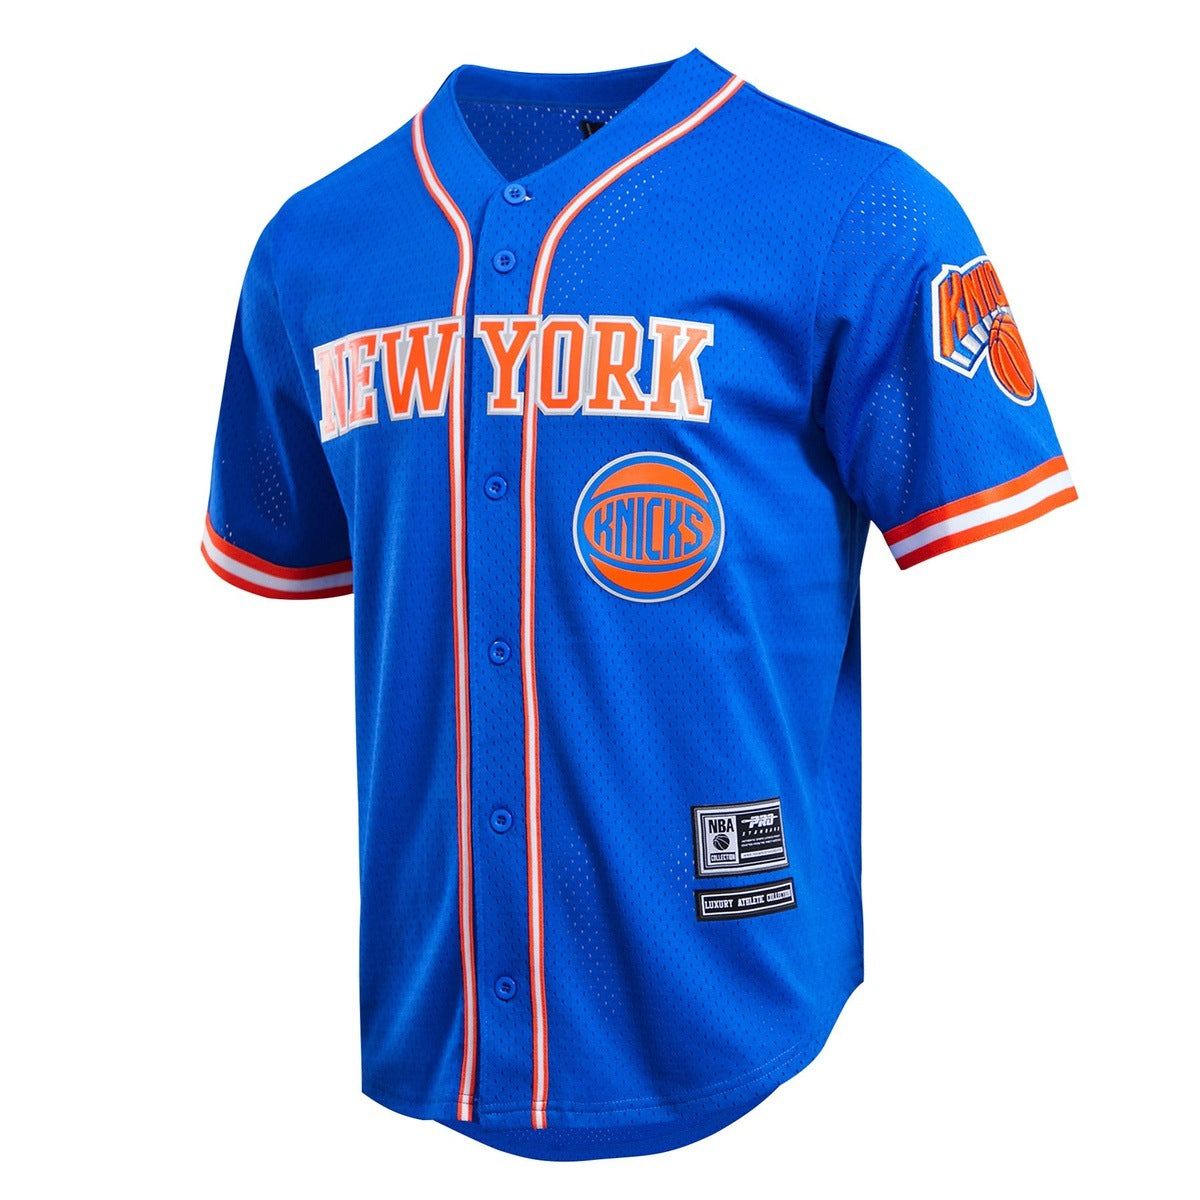 New York Knicks Starter Baseball Jersey - Royal/Orange